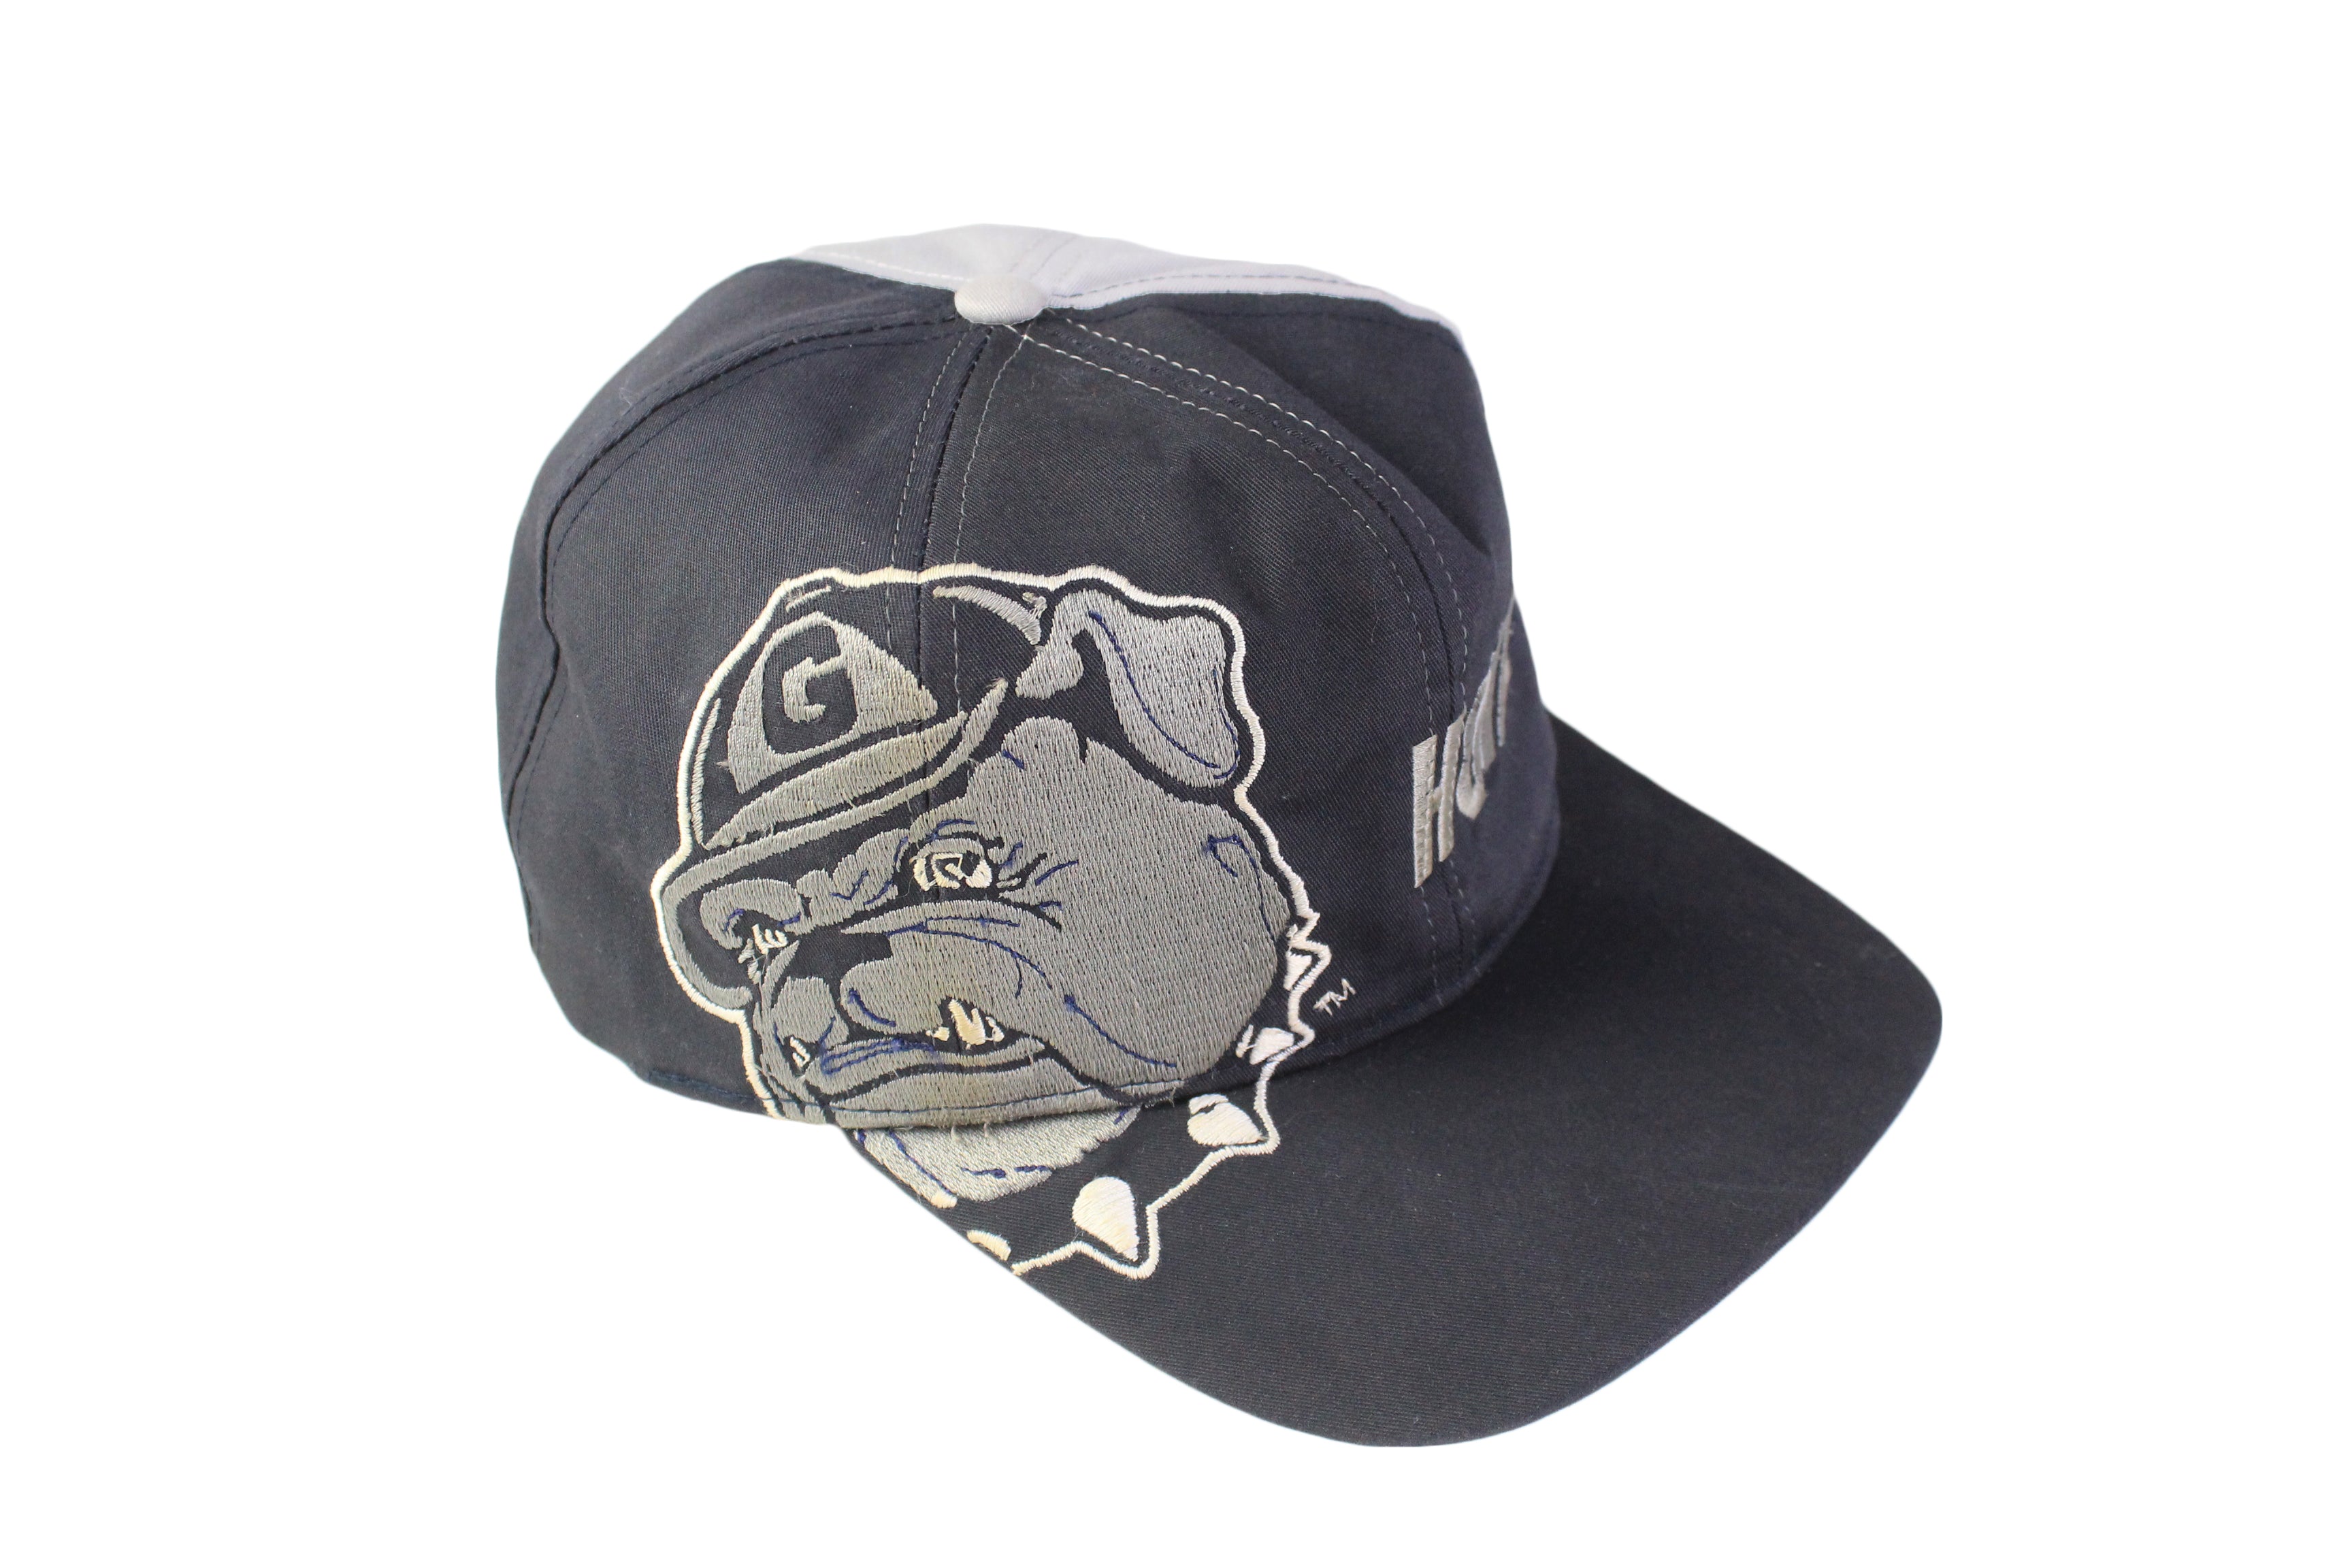 Vintage “Georgetown Hoyas” Hat – shoparea95